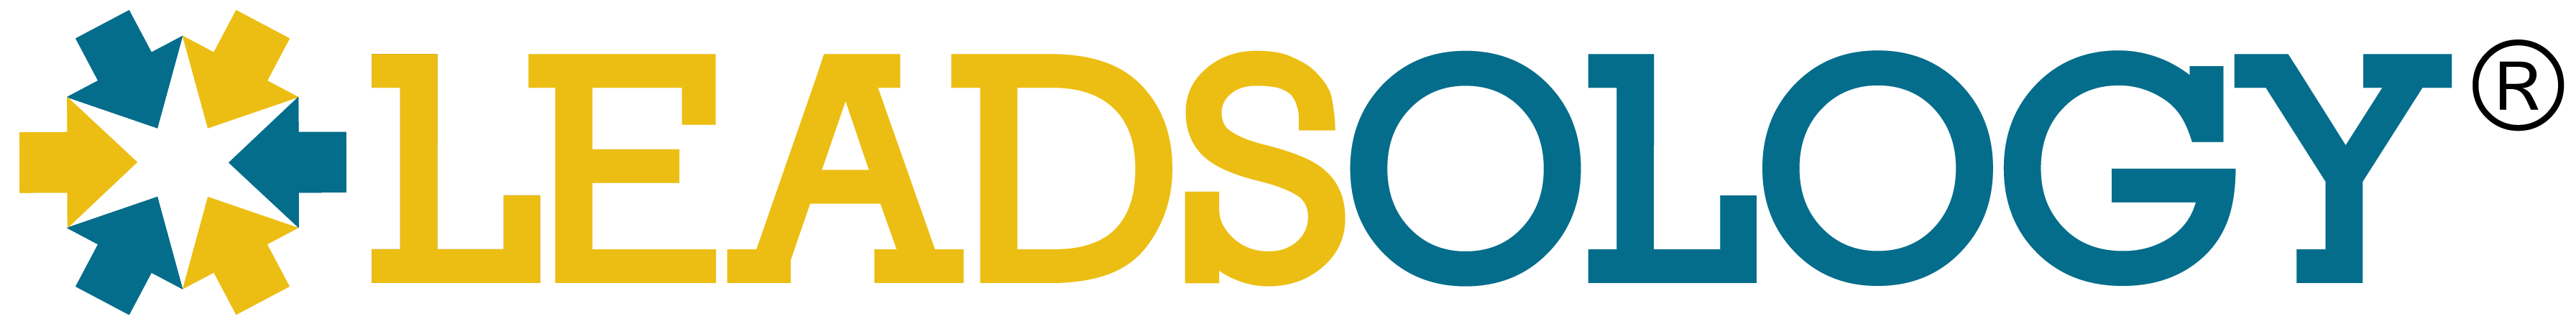 Leadsology logo